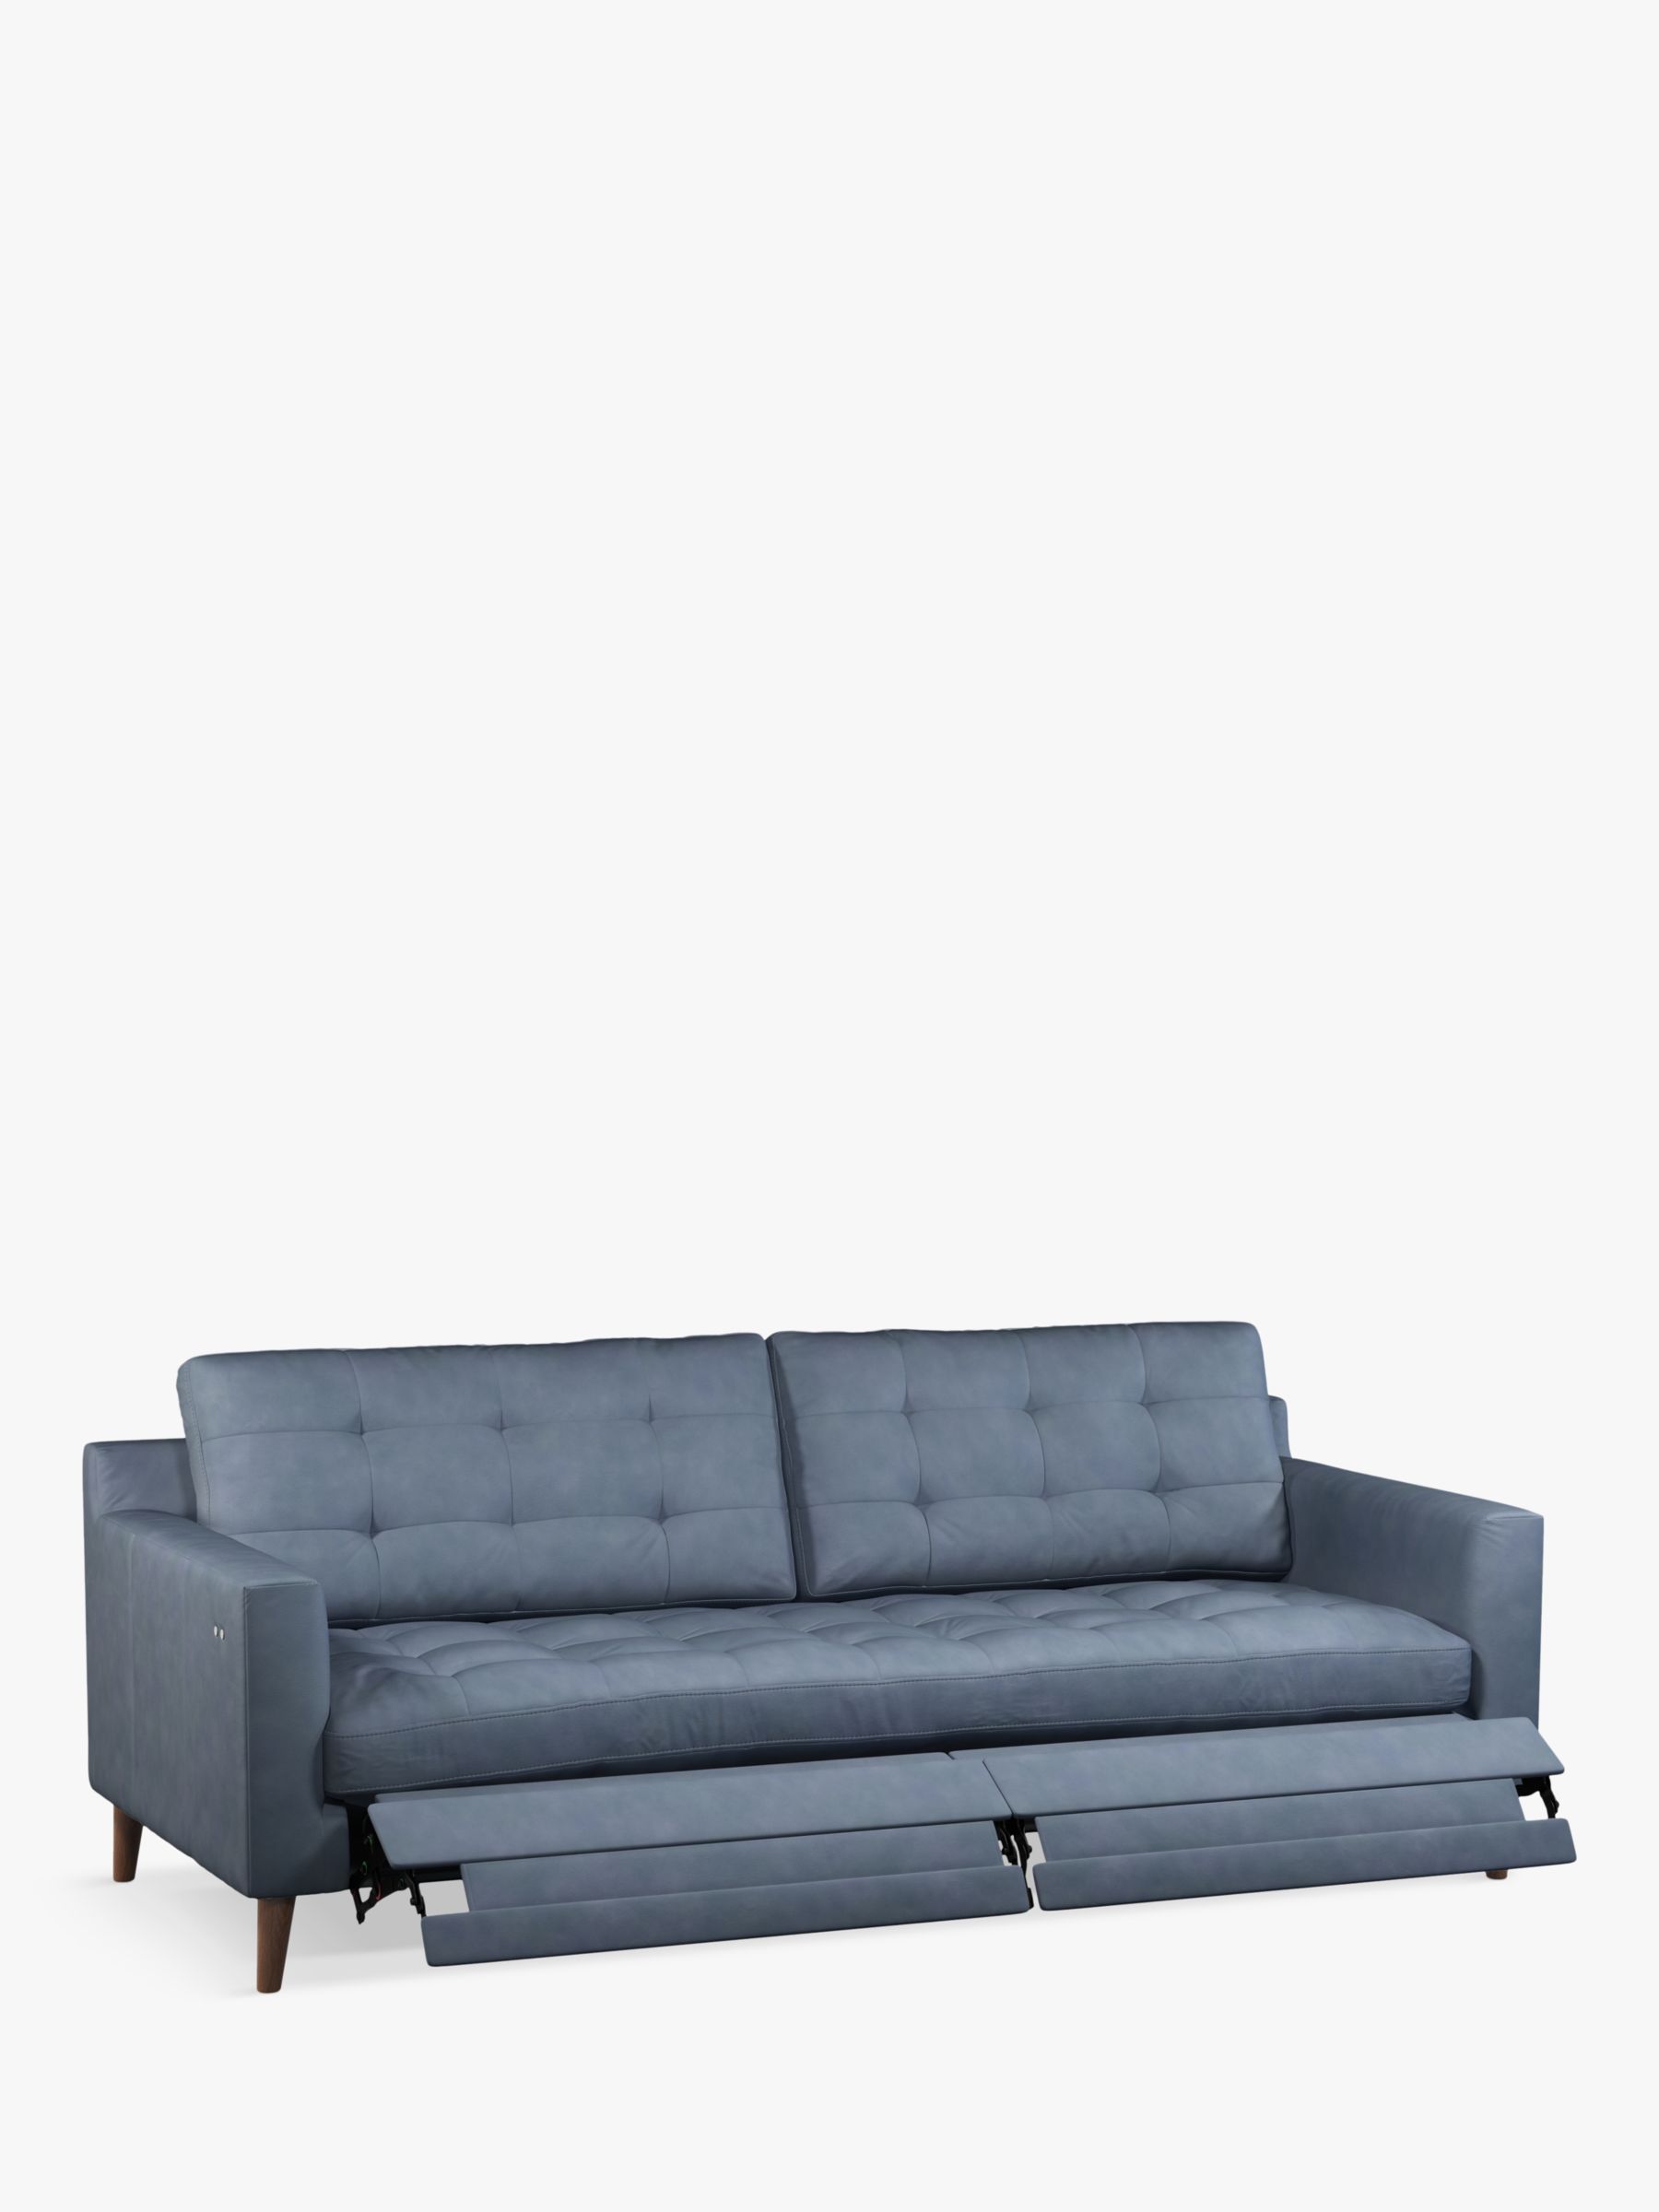 Draper Range, John Lewis Draper Motion Large 3 Seater Leather Sofa with Footrest Mechanism, Dark Leg, Soft Touch Blue